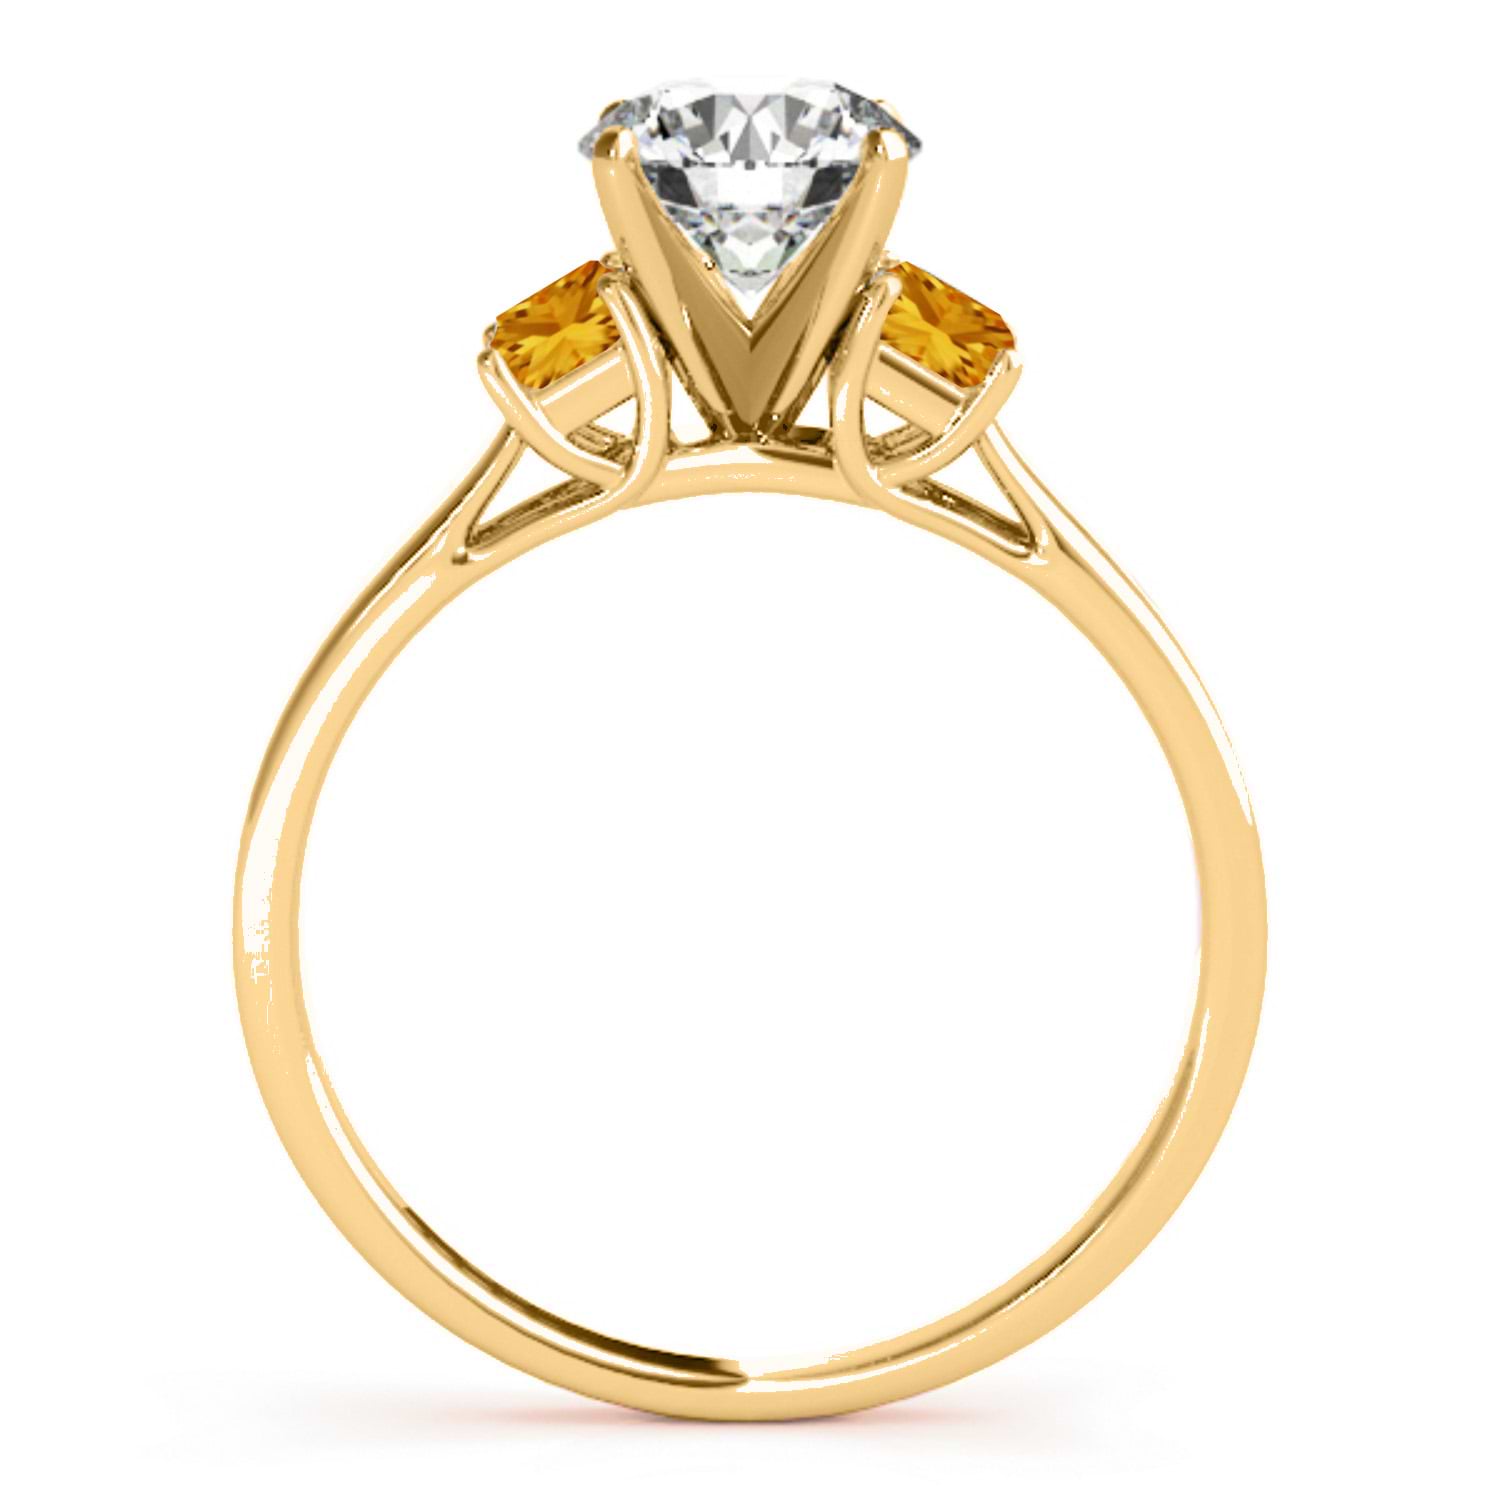 Trio Emerald Cut Citrine Engagement Ring 14k Yellow Gold (0.30ct)